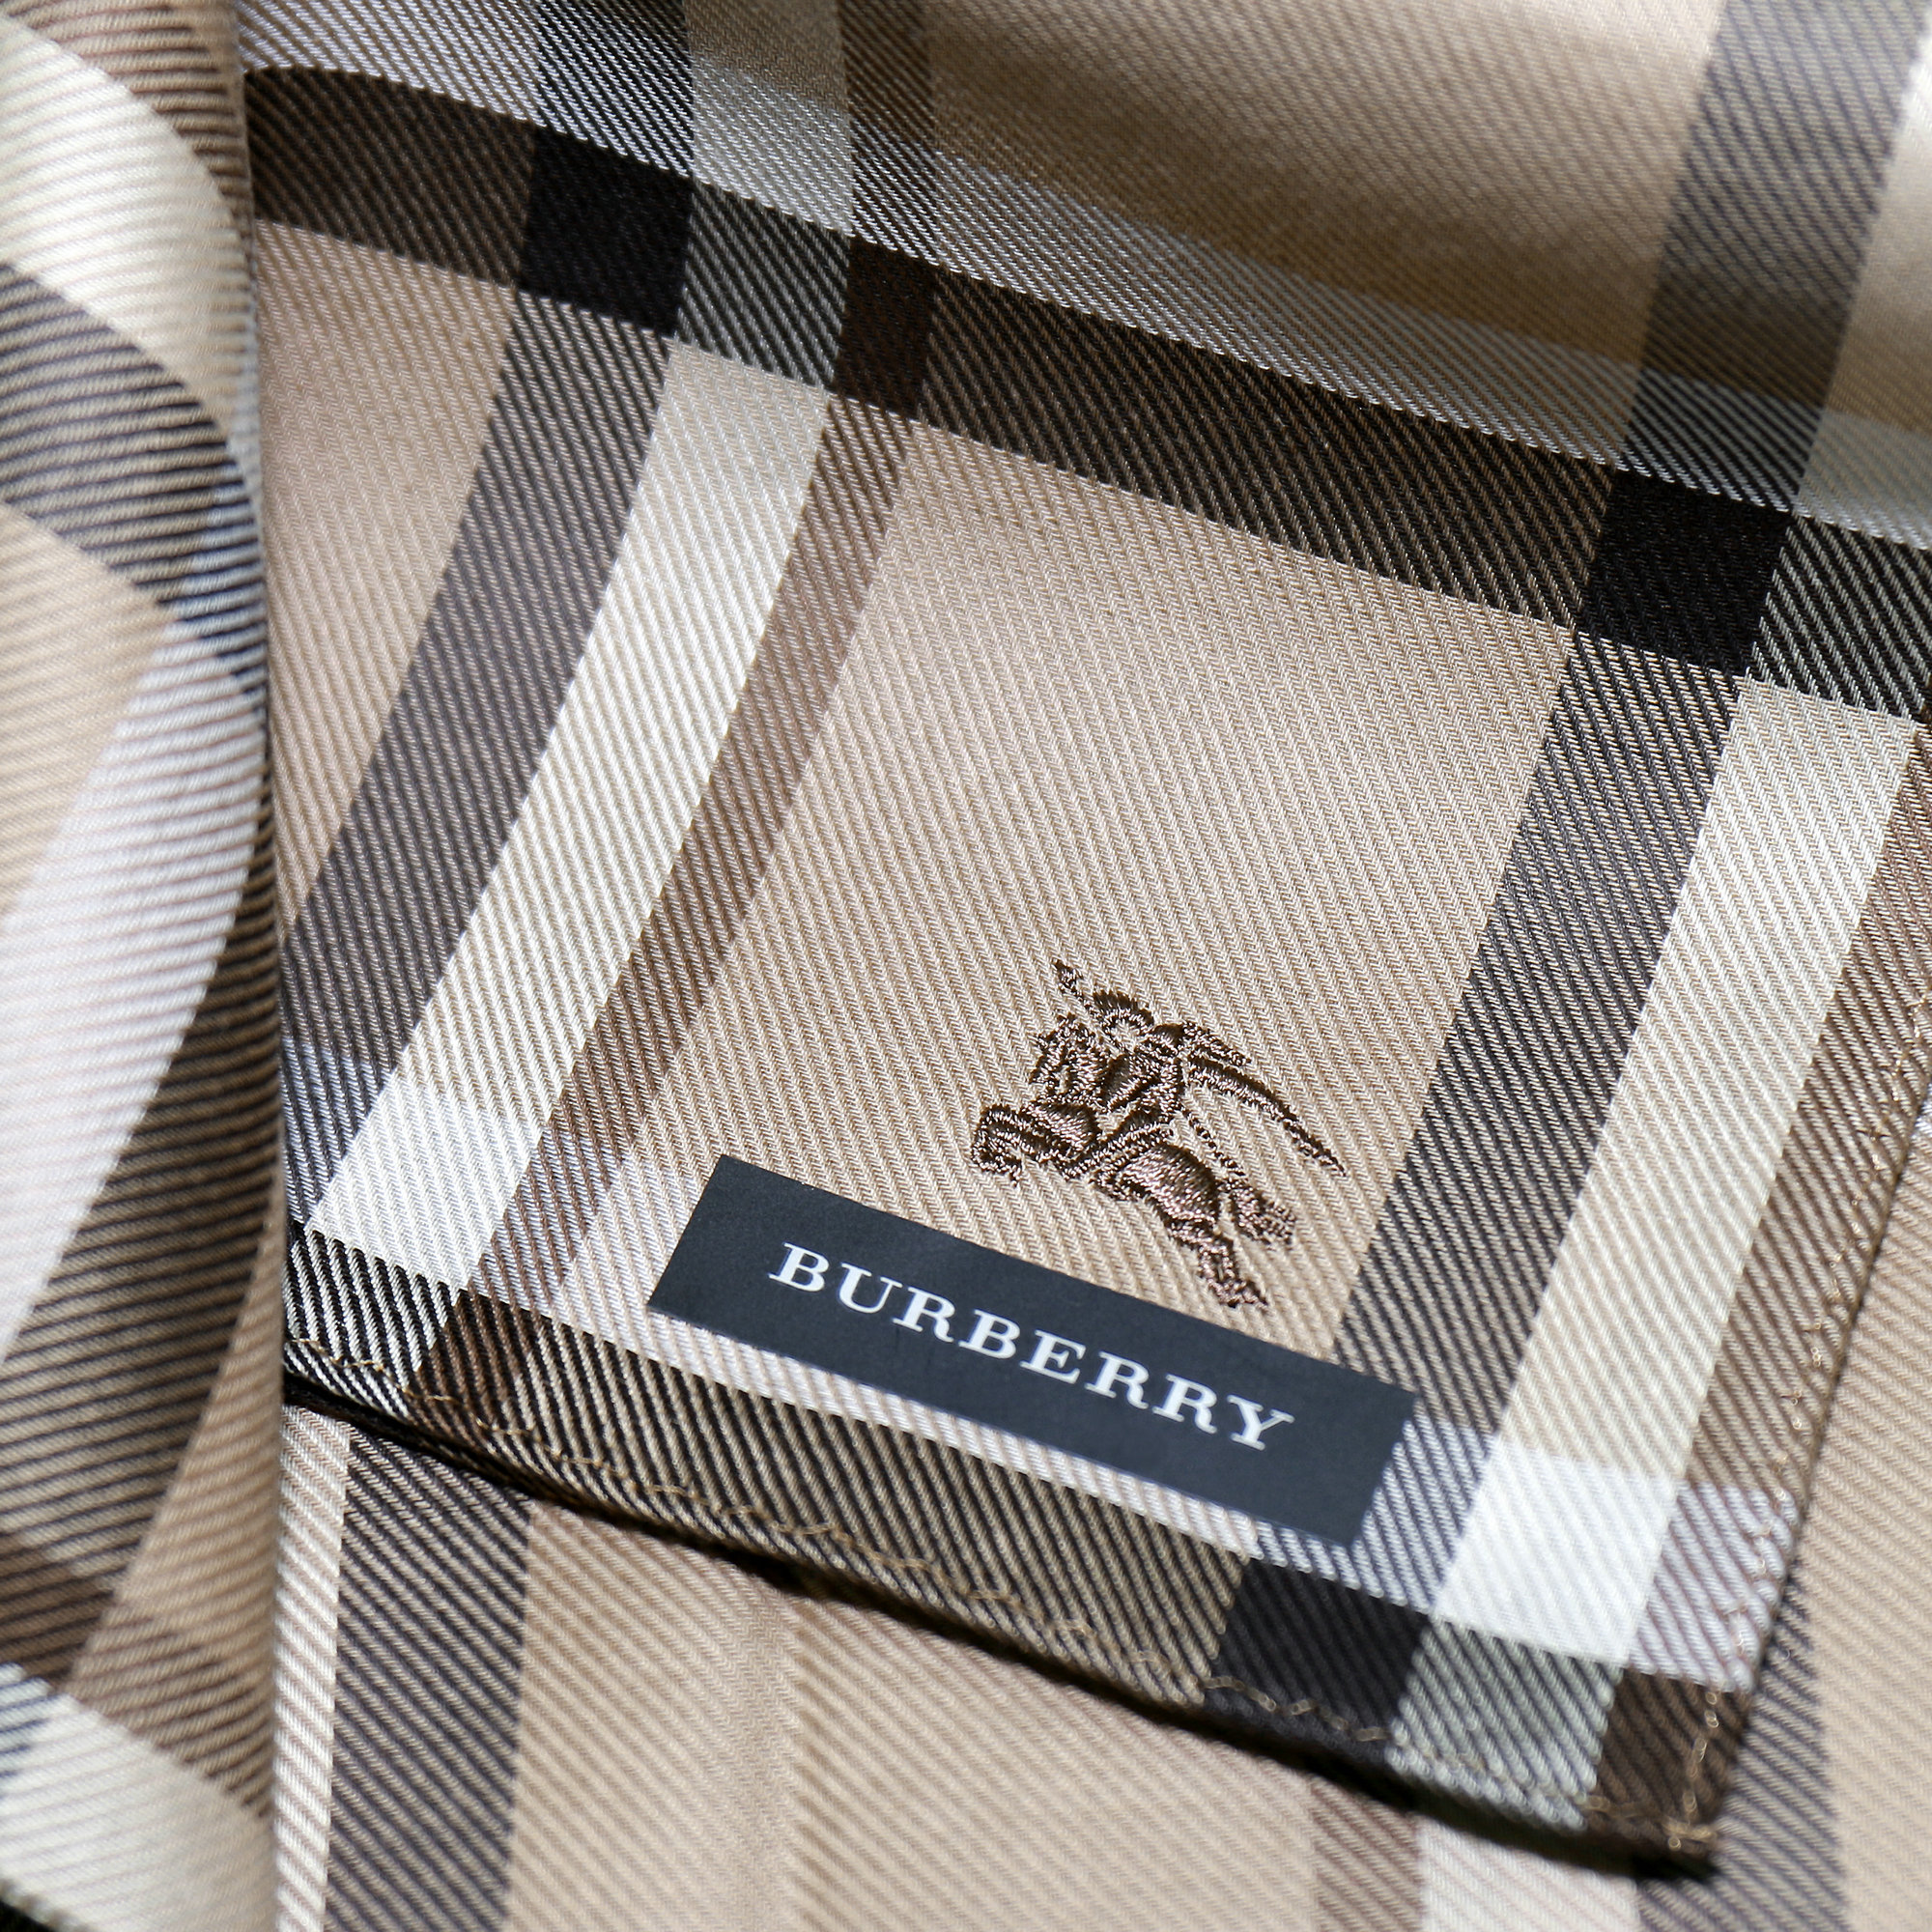 Burberry Handkerchief (Beige Square) - HANKII.COM